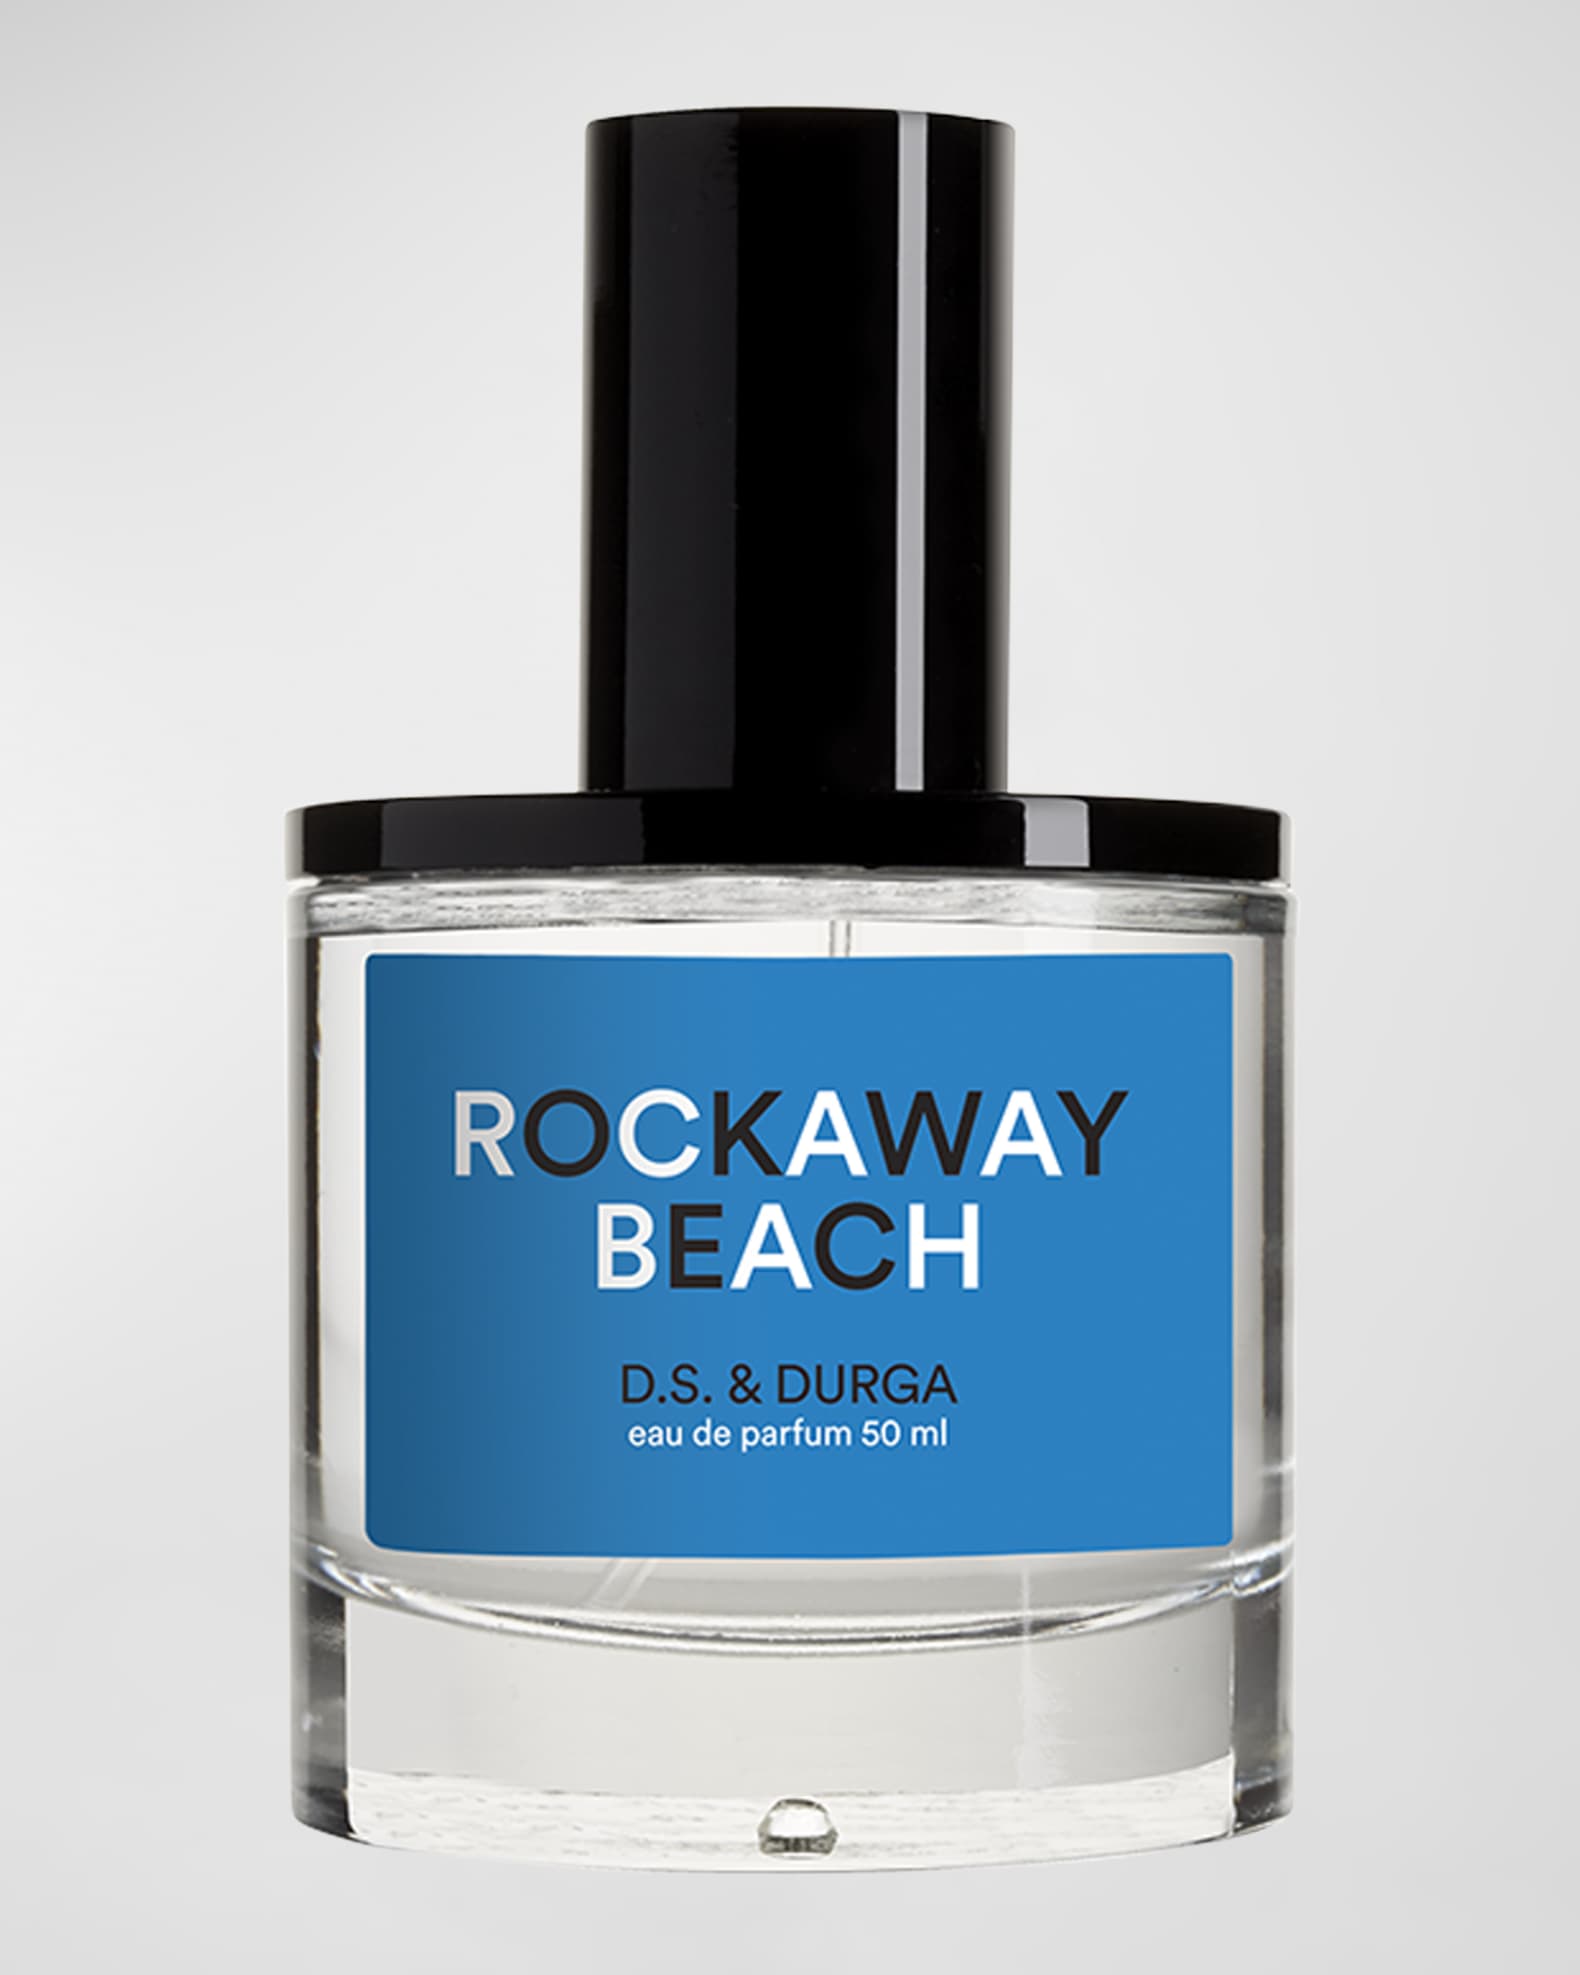 NEW LOUIS VUITTON On The Beach Eau De Parfum Perfume Sample Travel Spray 2  ml